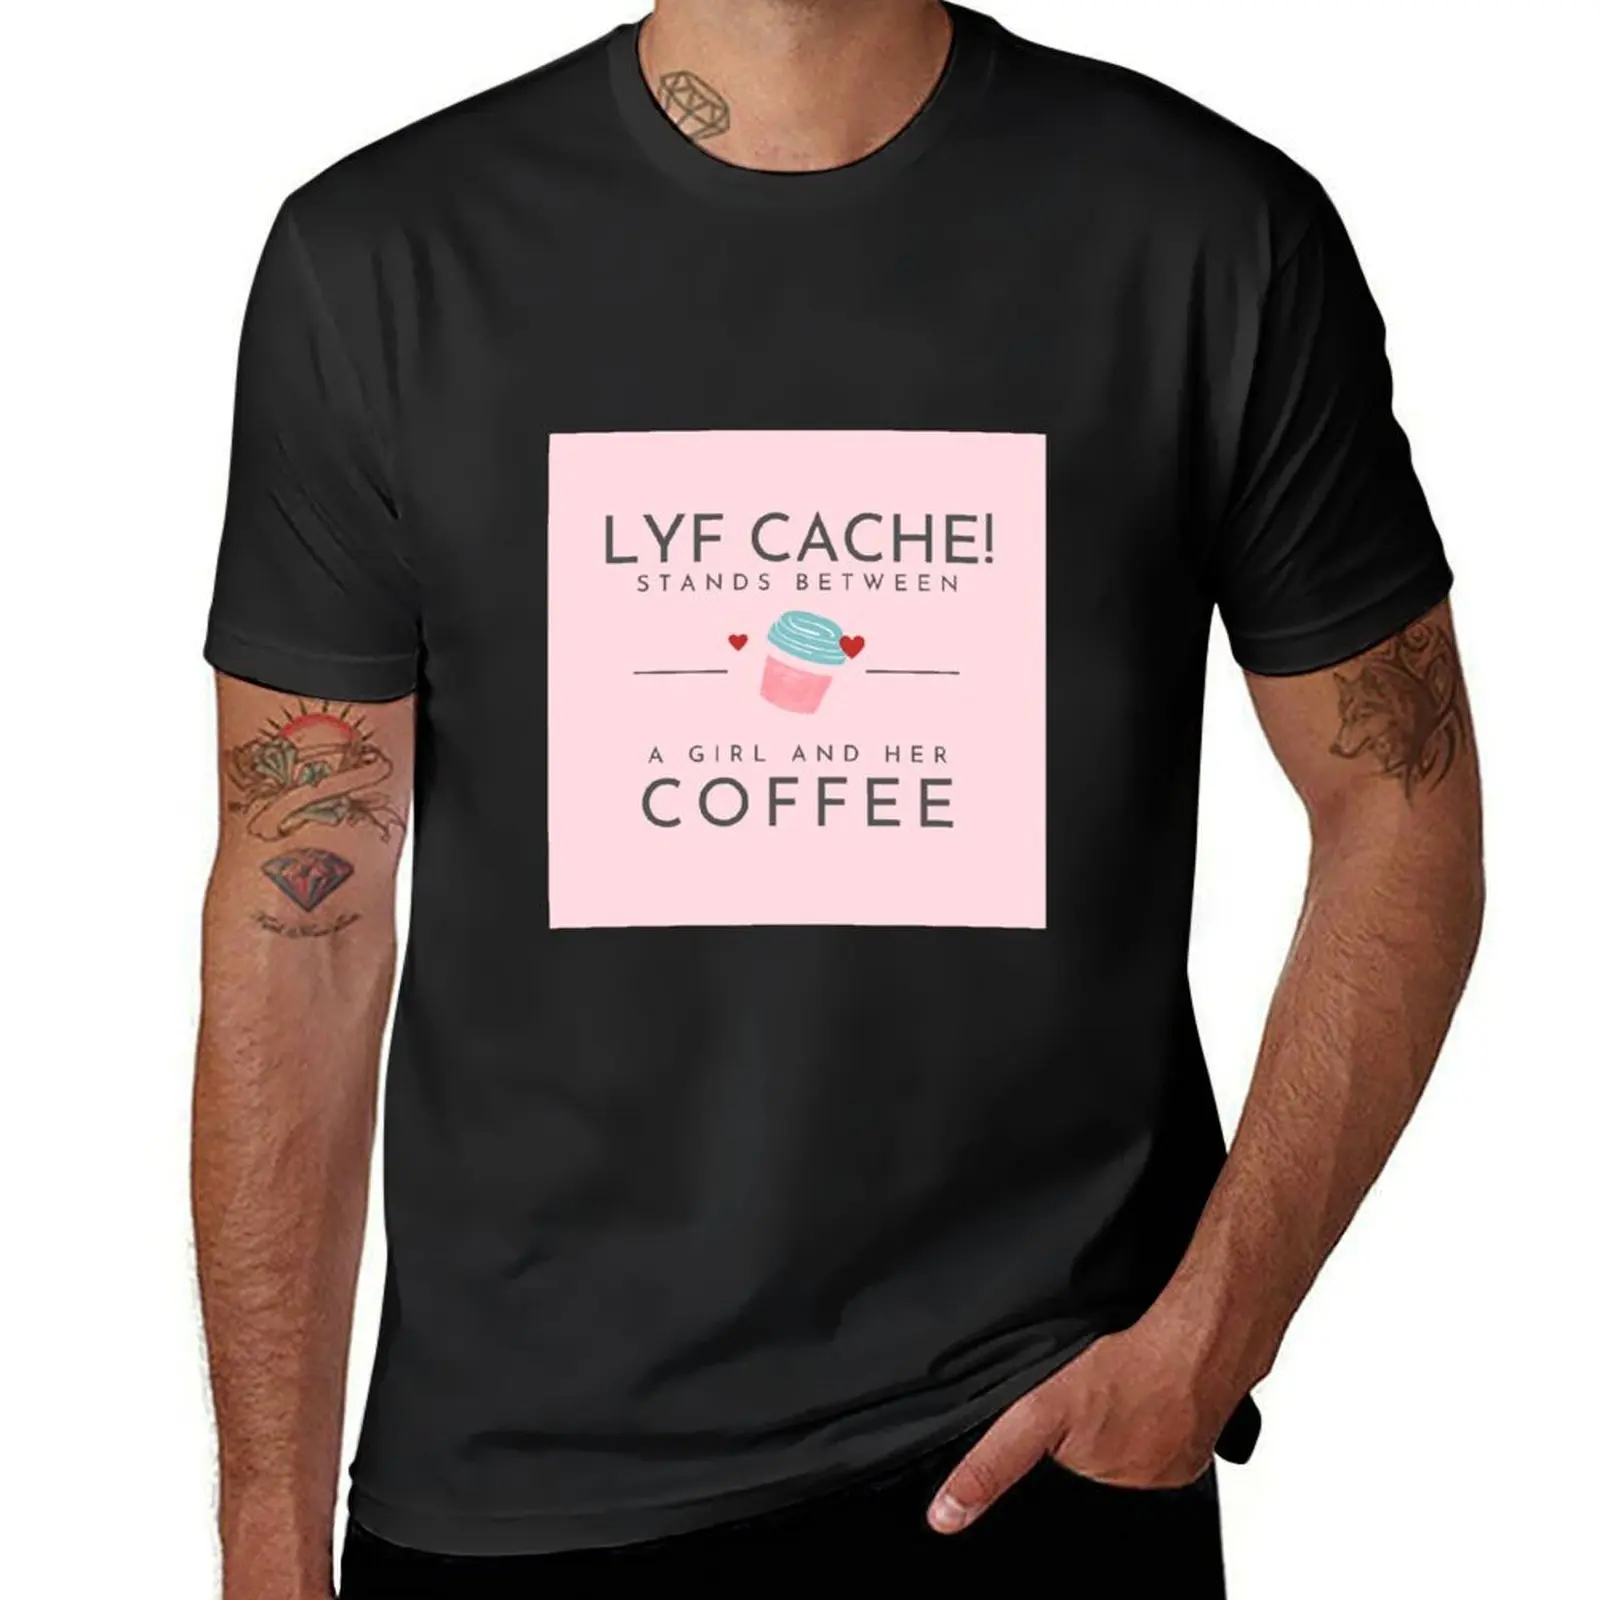 lyf cache coffee T-Shirt hippie clothes boys animal print blacks aesthetic clothes t shirt men